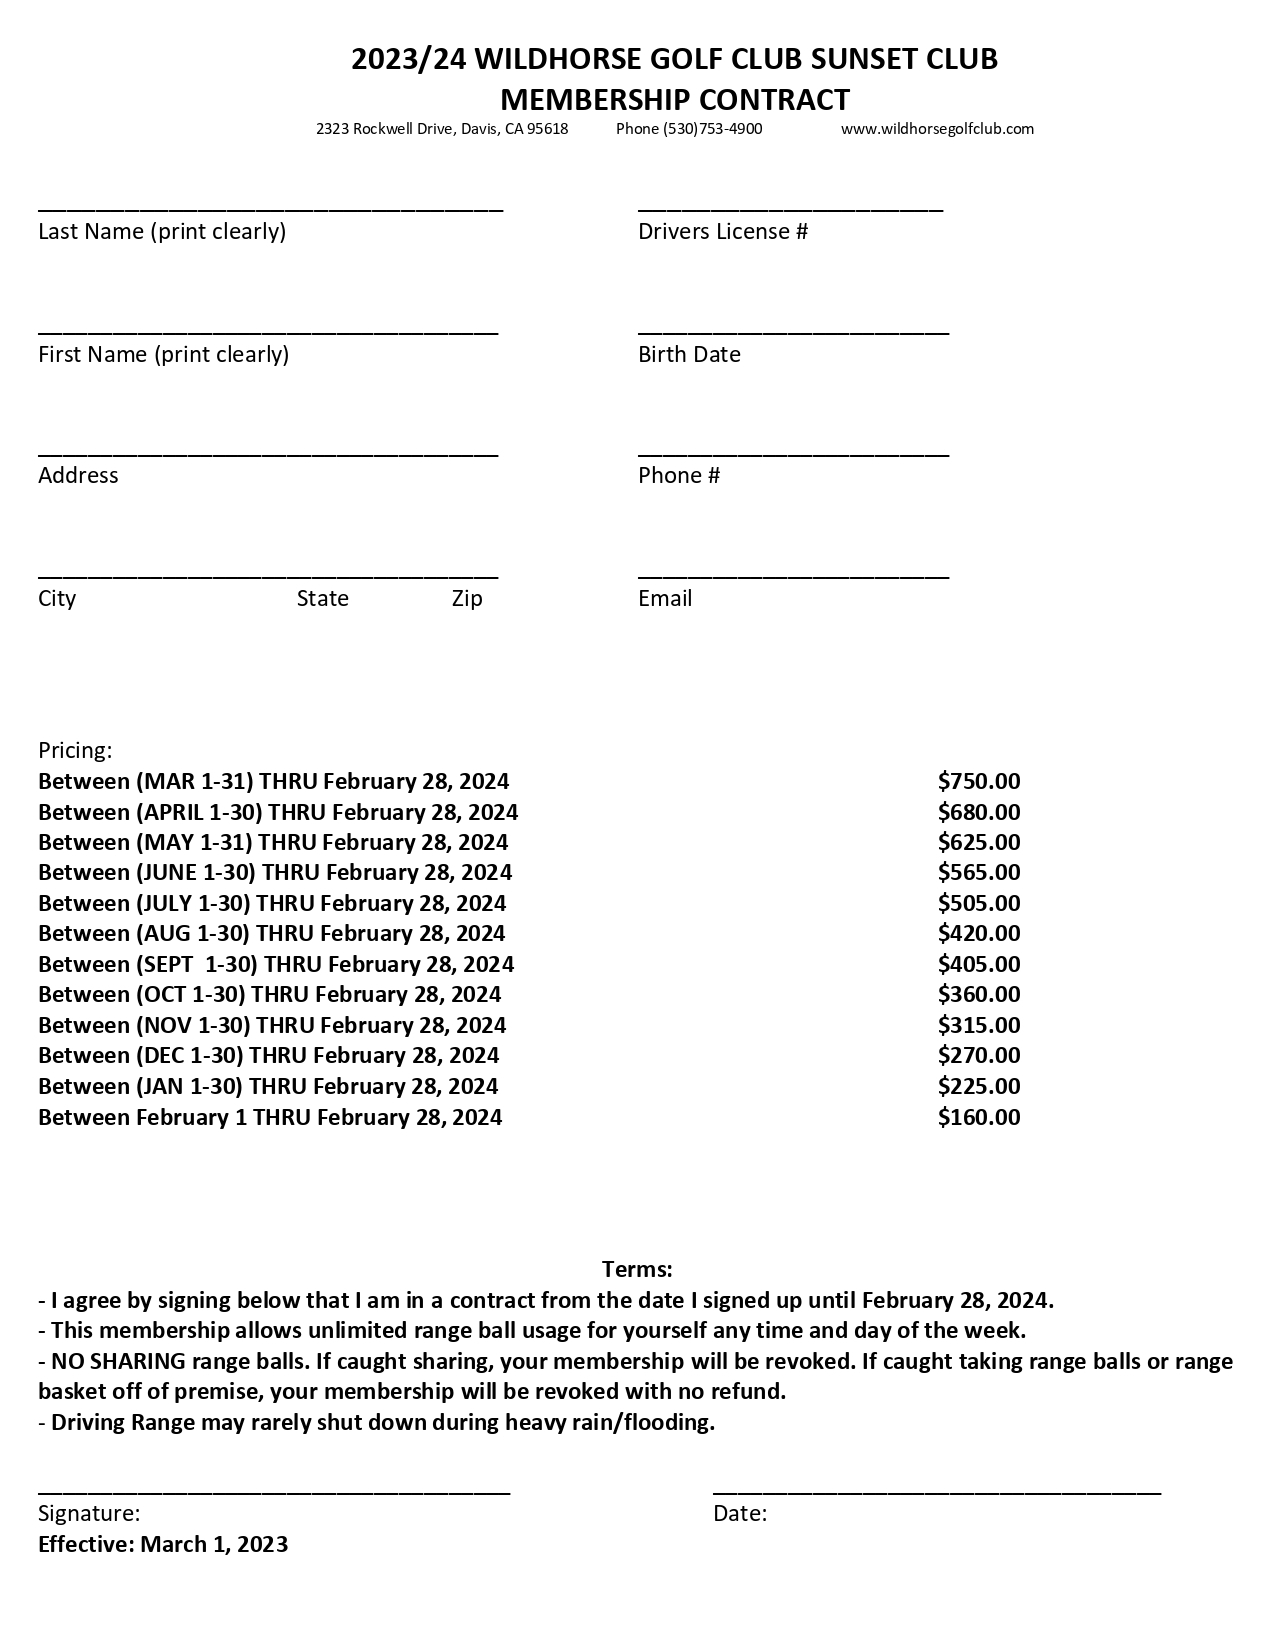 Wildhorse Golf Club | Golf Memberships - (2023-24) Sunset Club Membership Contract (Page #1)